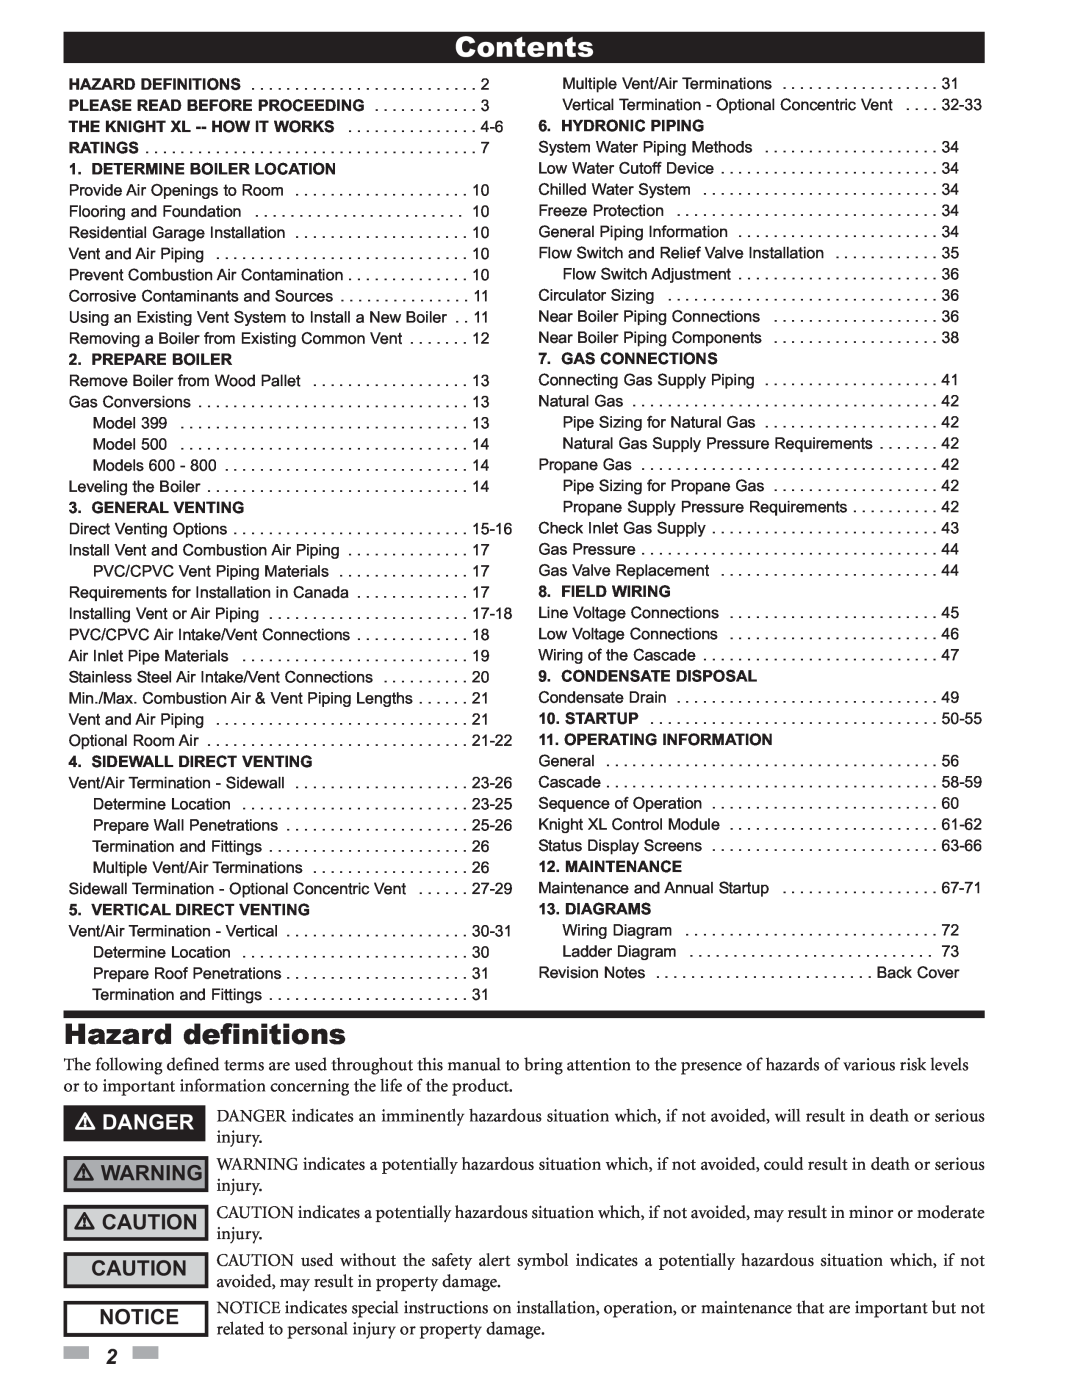 Lochinvar 399 operation manual Hazard definitions, Danger, Caution Caution Notice, Contents 